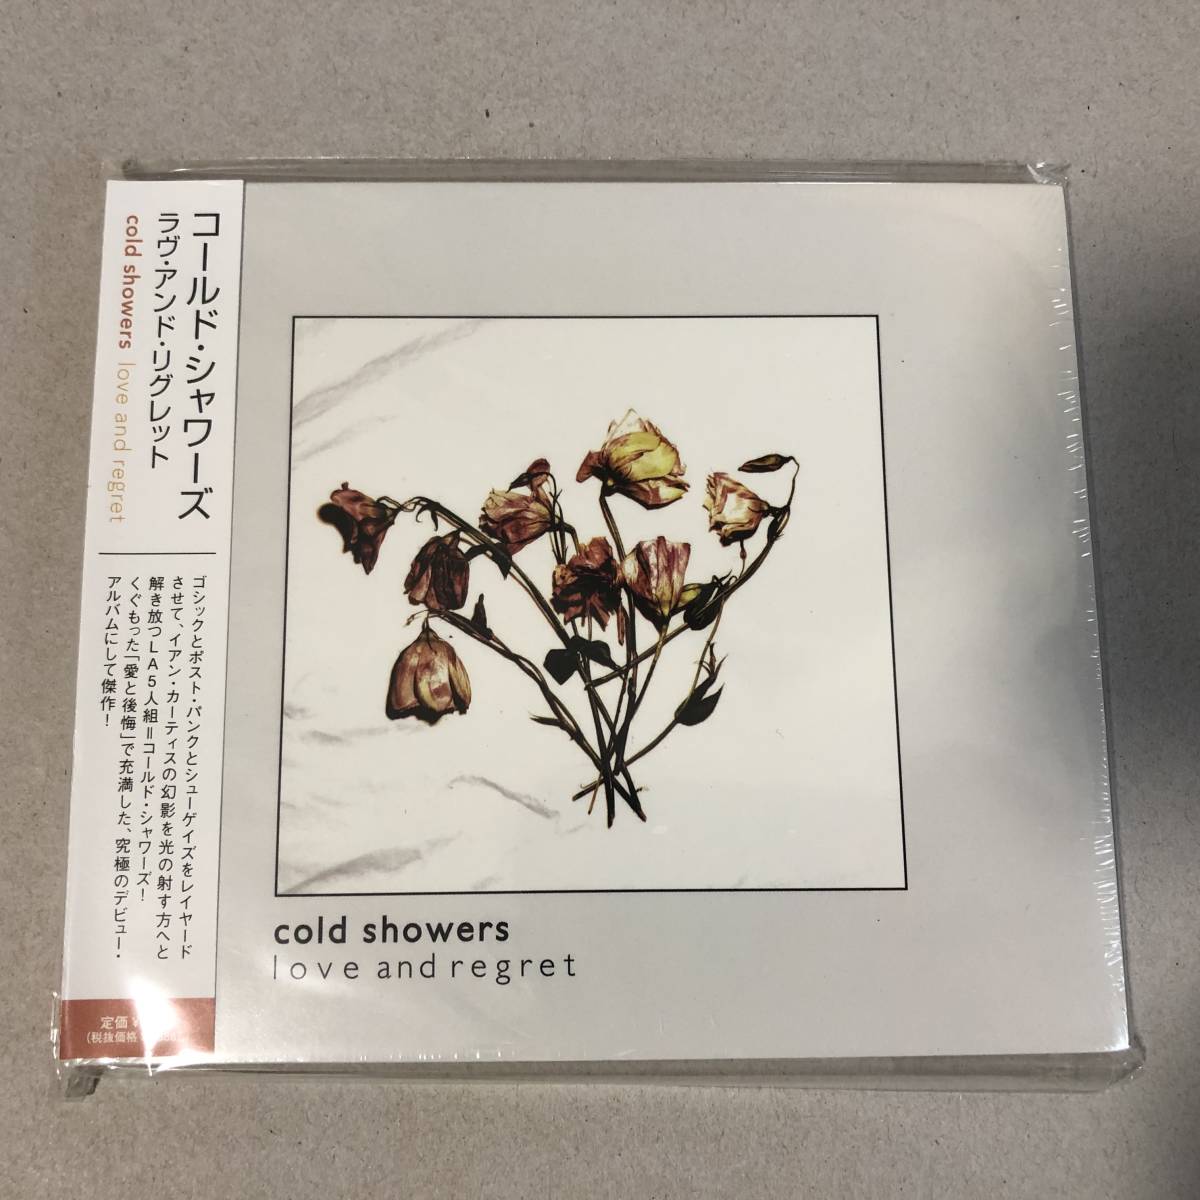 Cold Showers CD Mika Miko Bleached Vivian Girls La Sera Post Punk Indie Rock post punk Indy - блокировка 